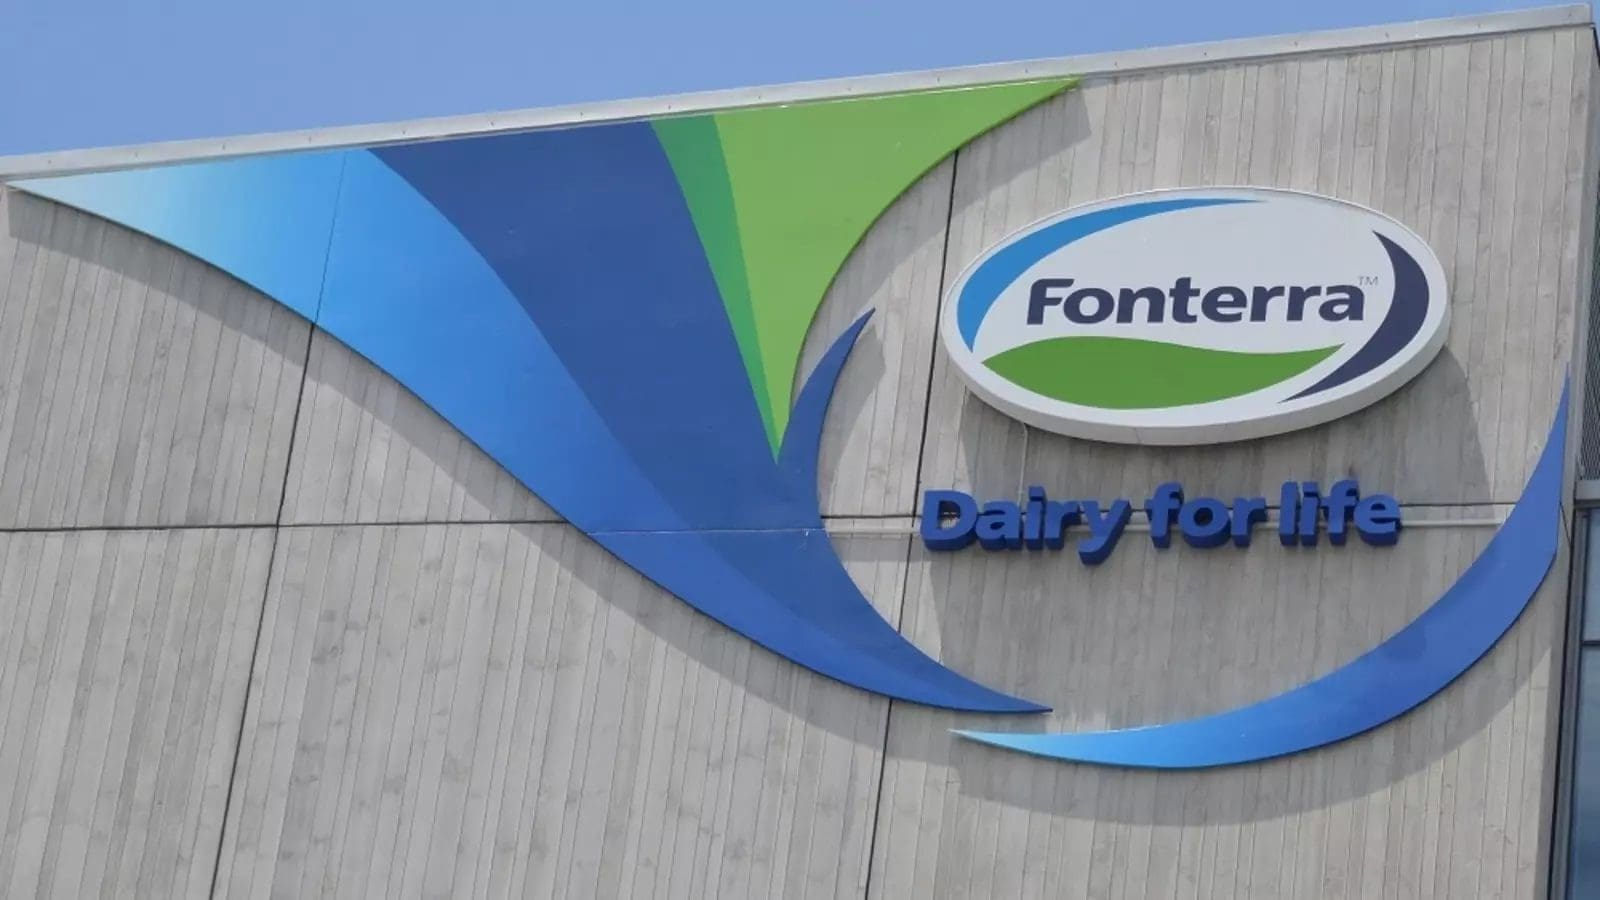 Fonterra raises international profile of Global Dairy Trade platform with addition of new strategic partners